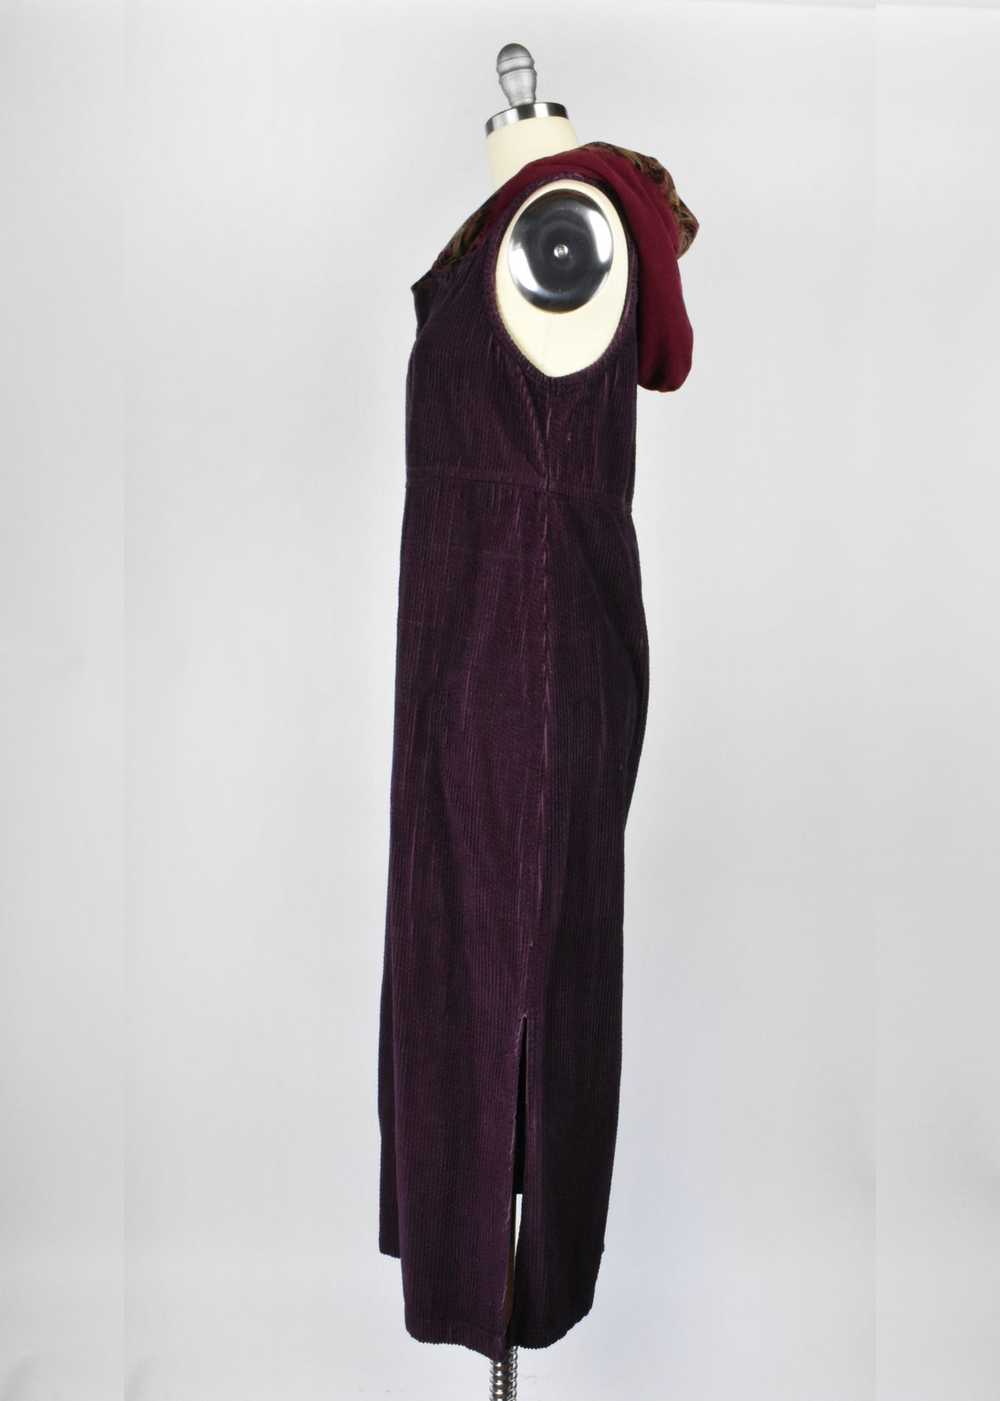 1990's Sleeveless Corduroy Dress with Hood - image 4